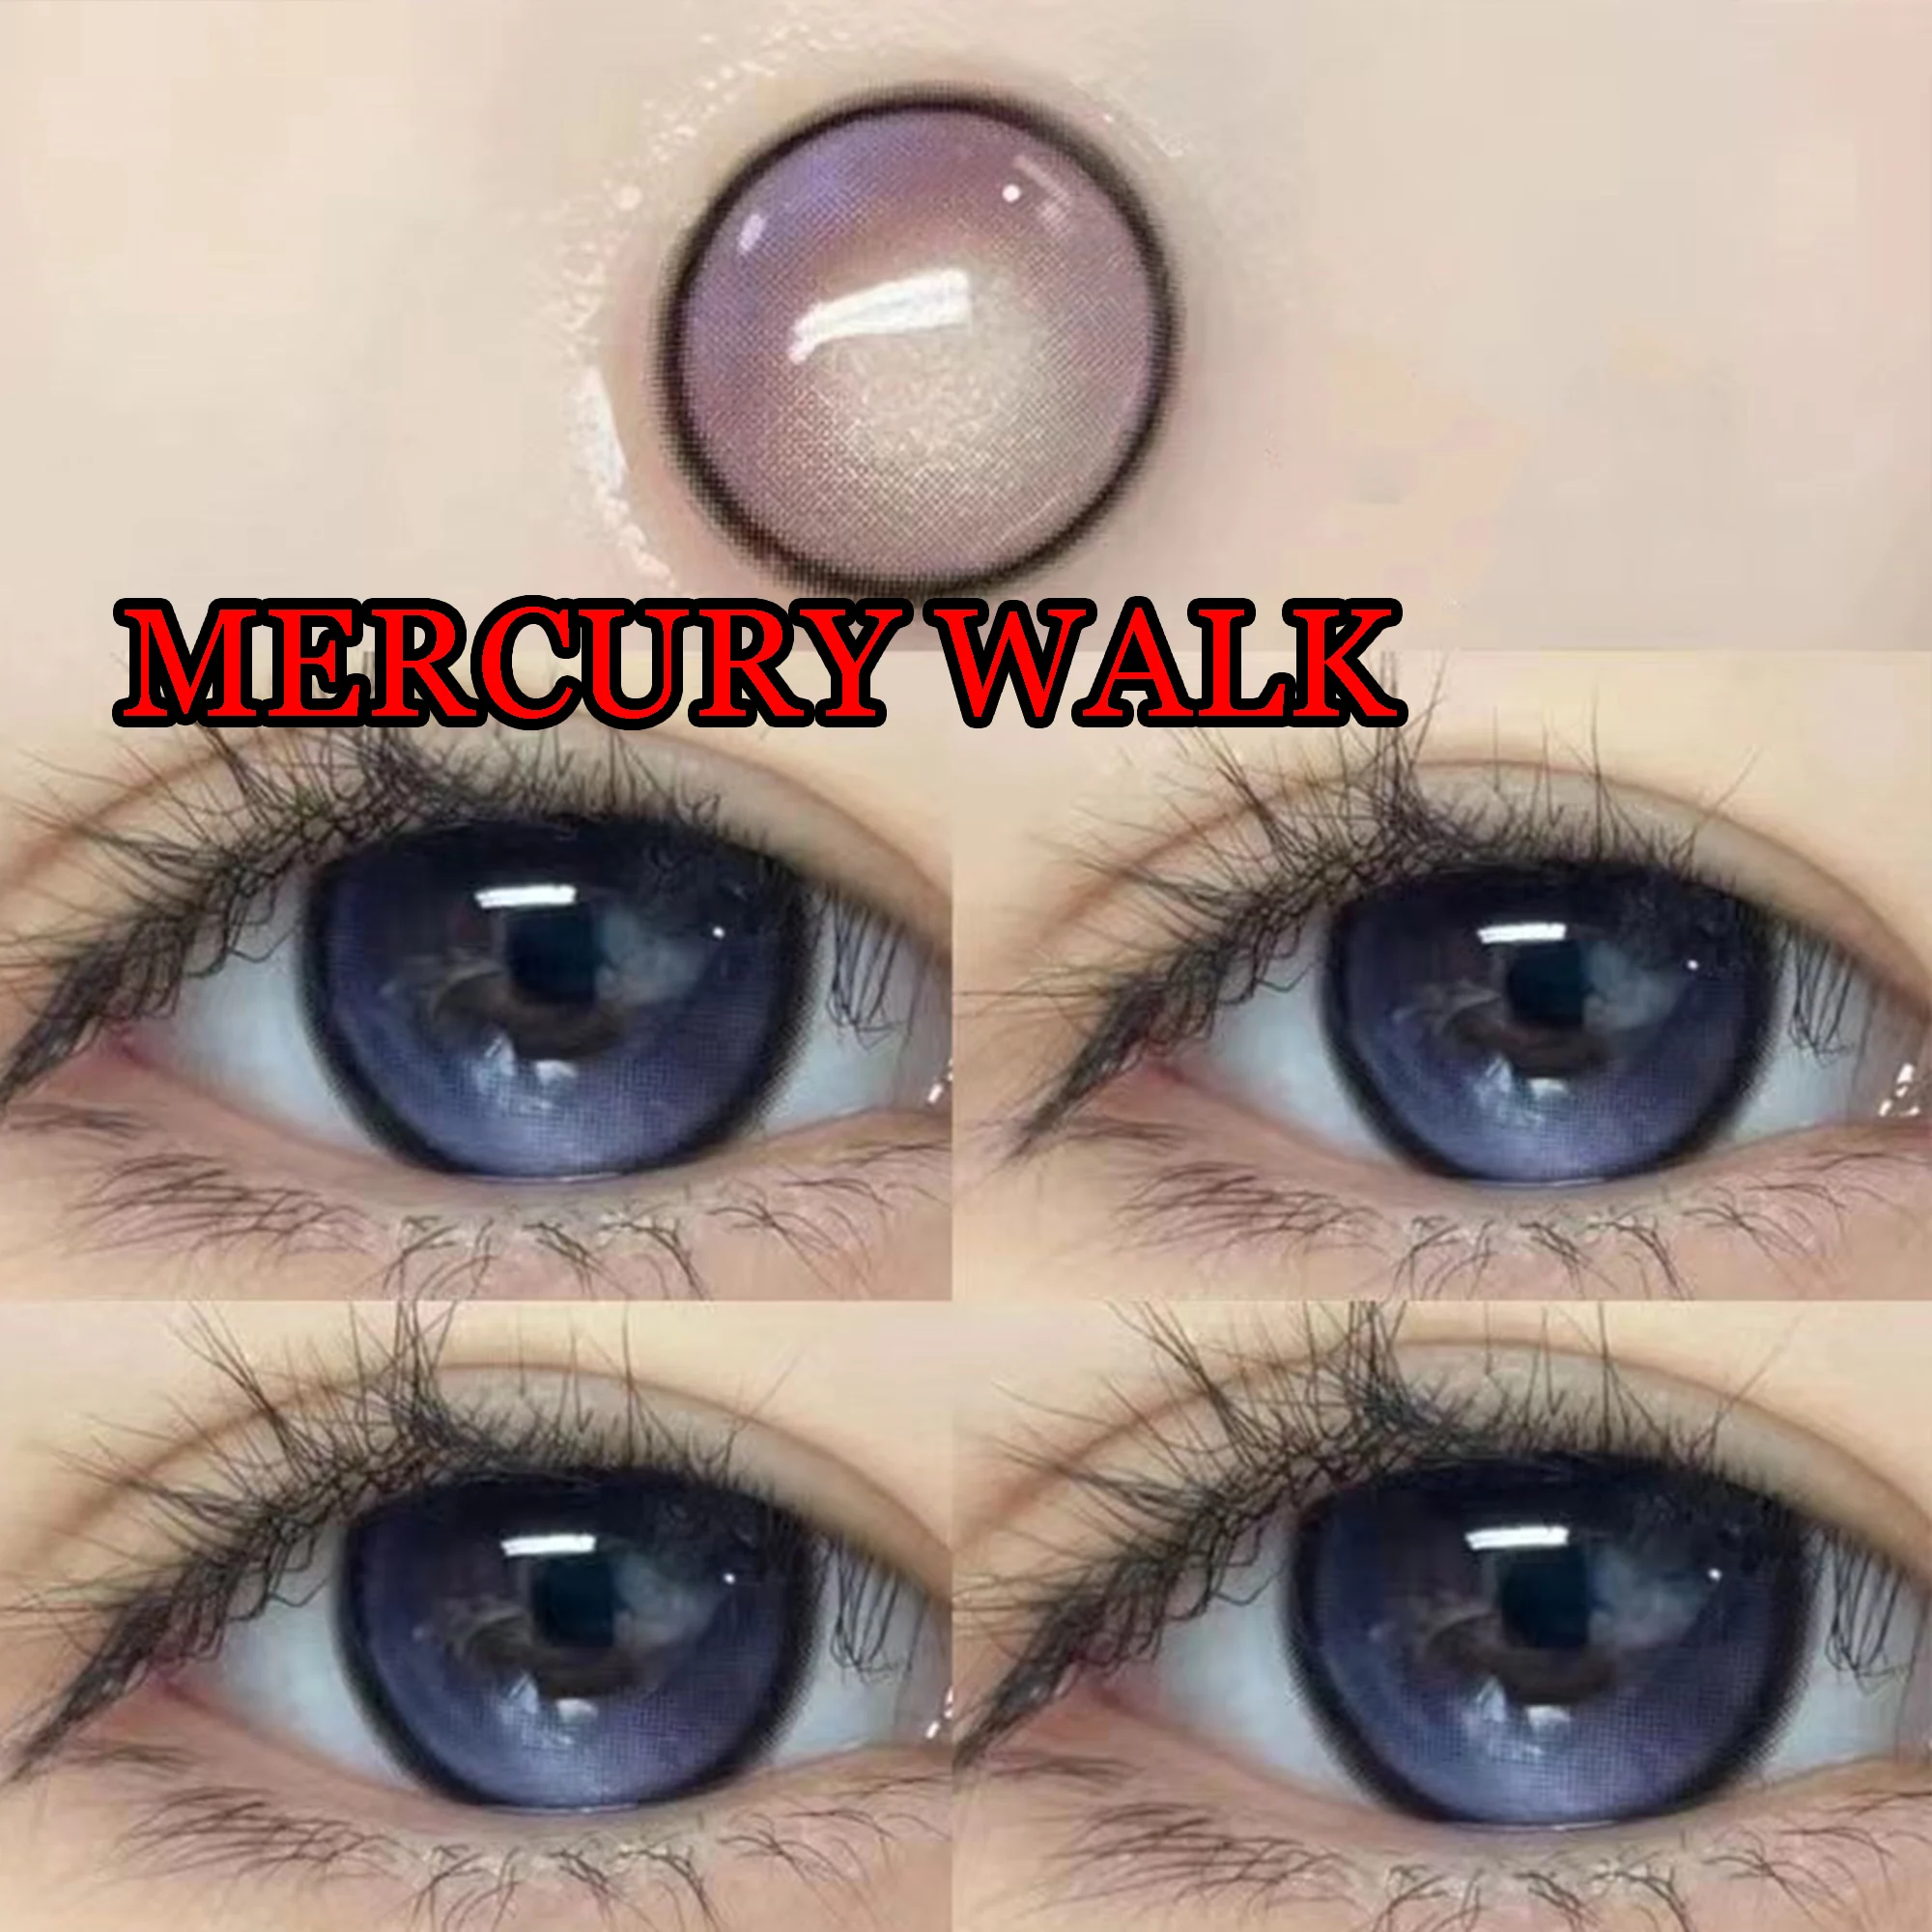 

Purple Eye Women Men Color Soft Contacts Lens for Cosplay Glasses with Prescription Women Men Mercury Walk Violet